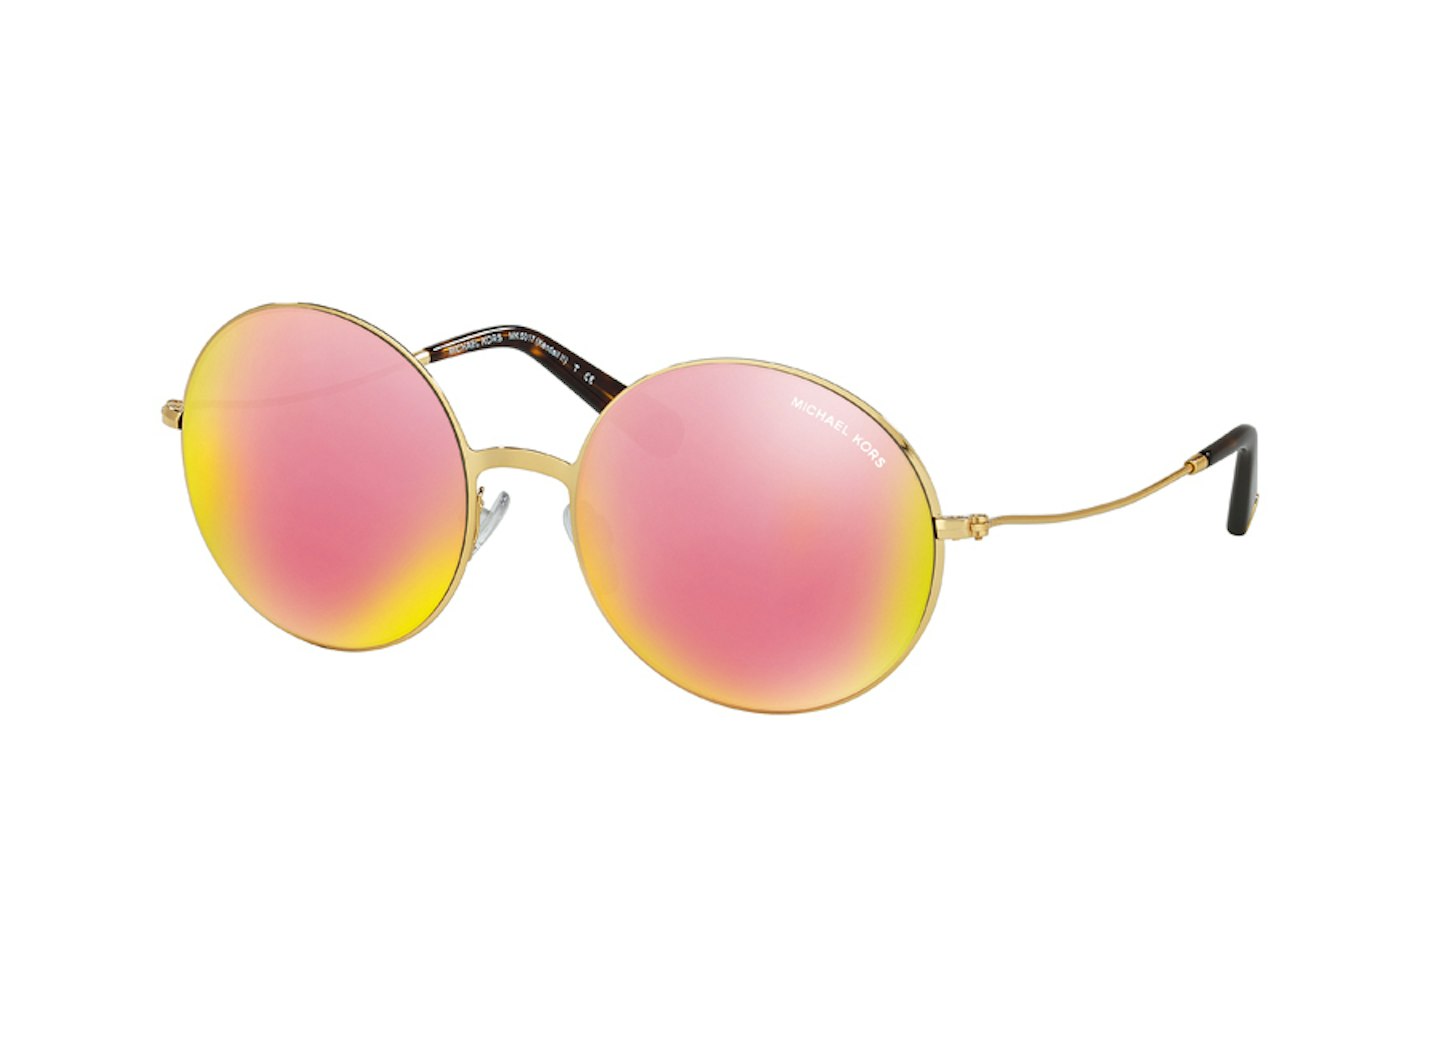 Sunglasses 2016